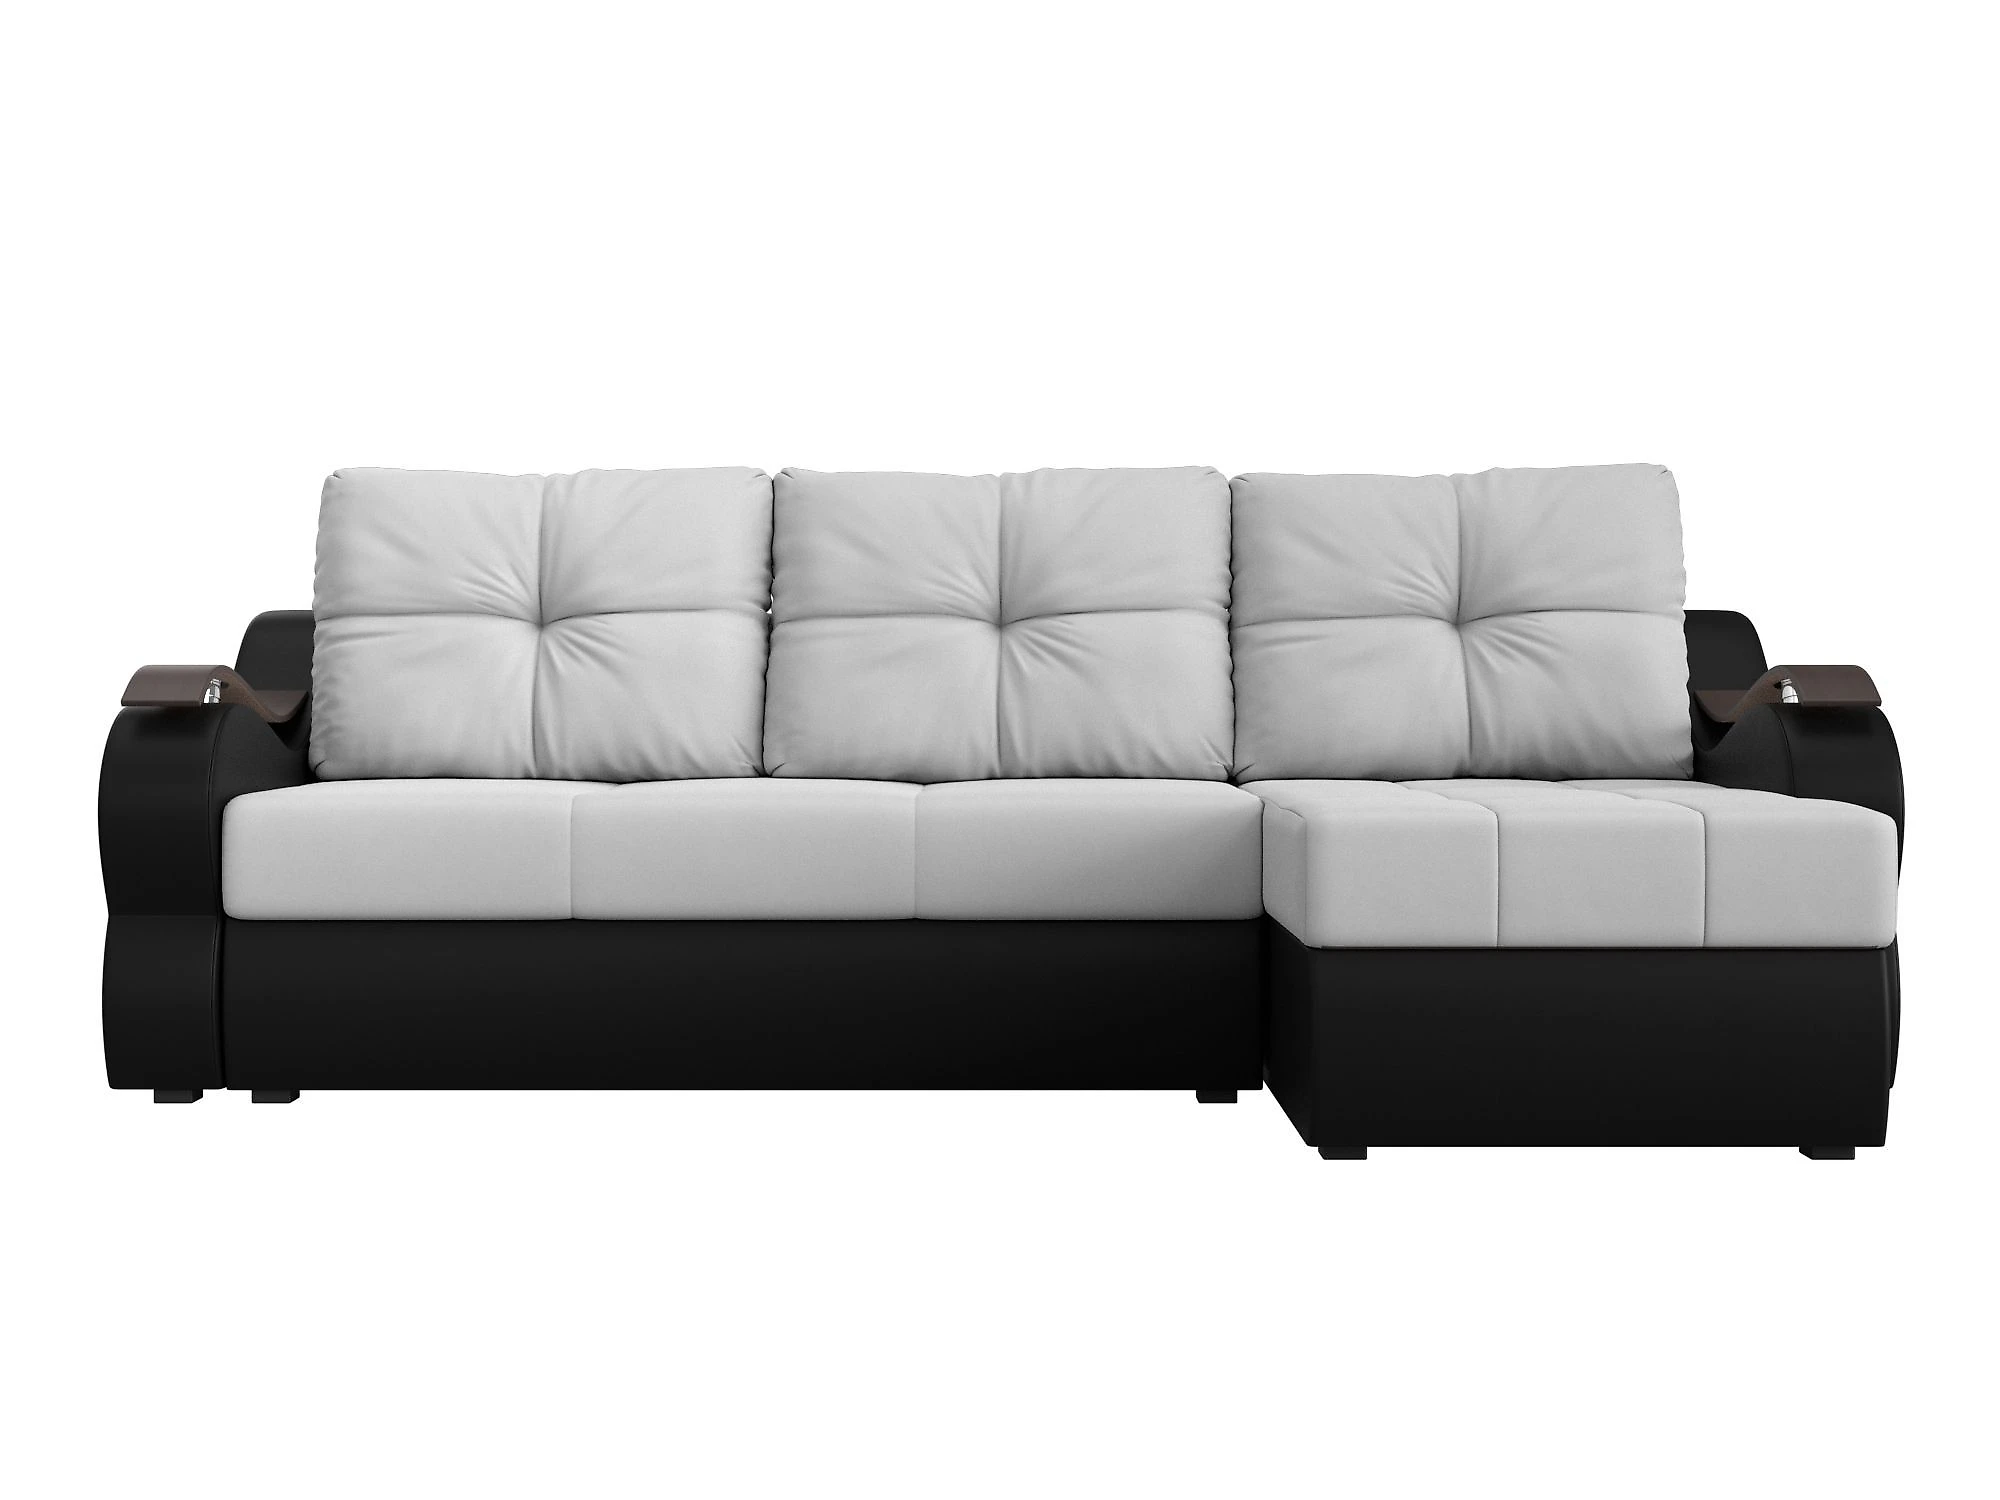  кожаный диван еврокнижка Меркурий Дизайн 13